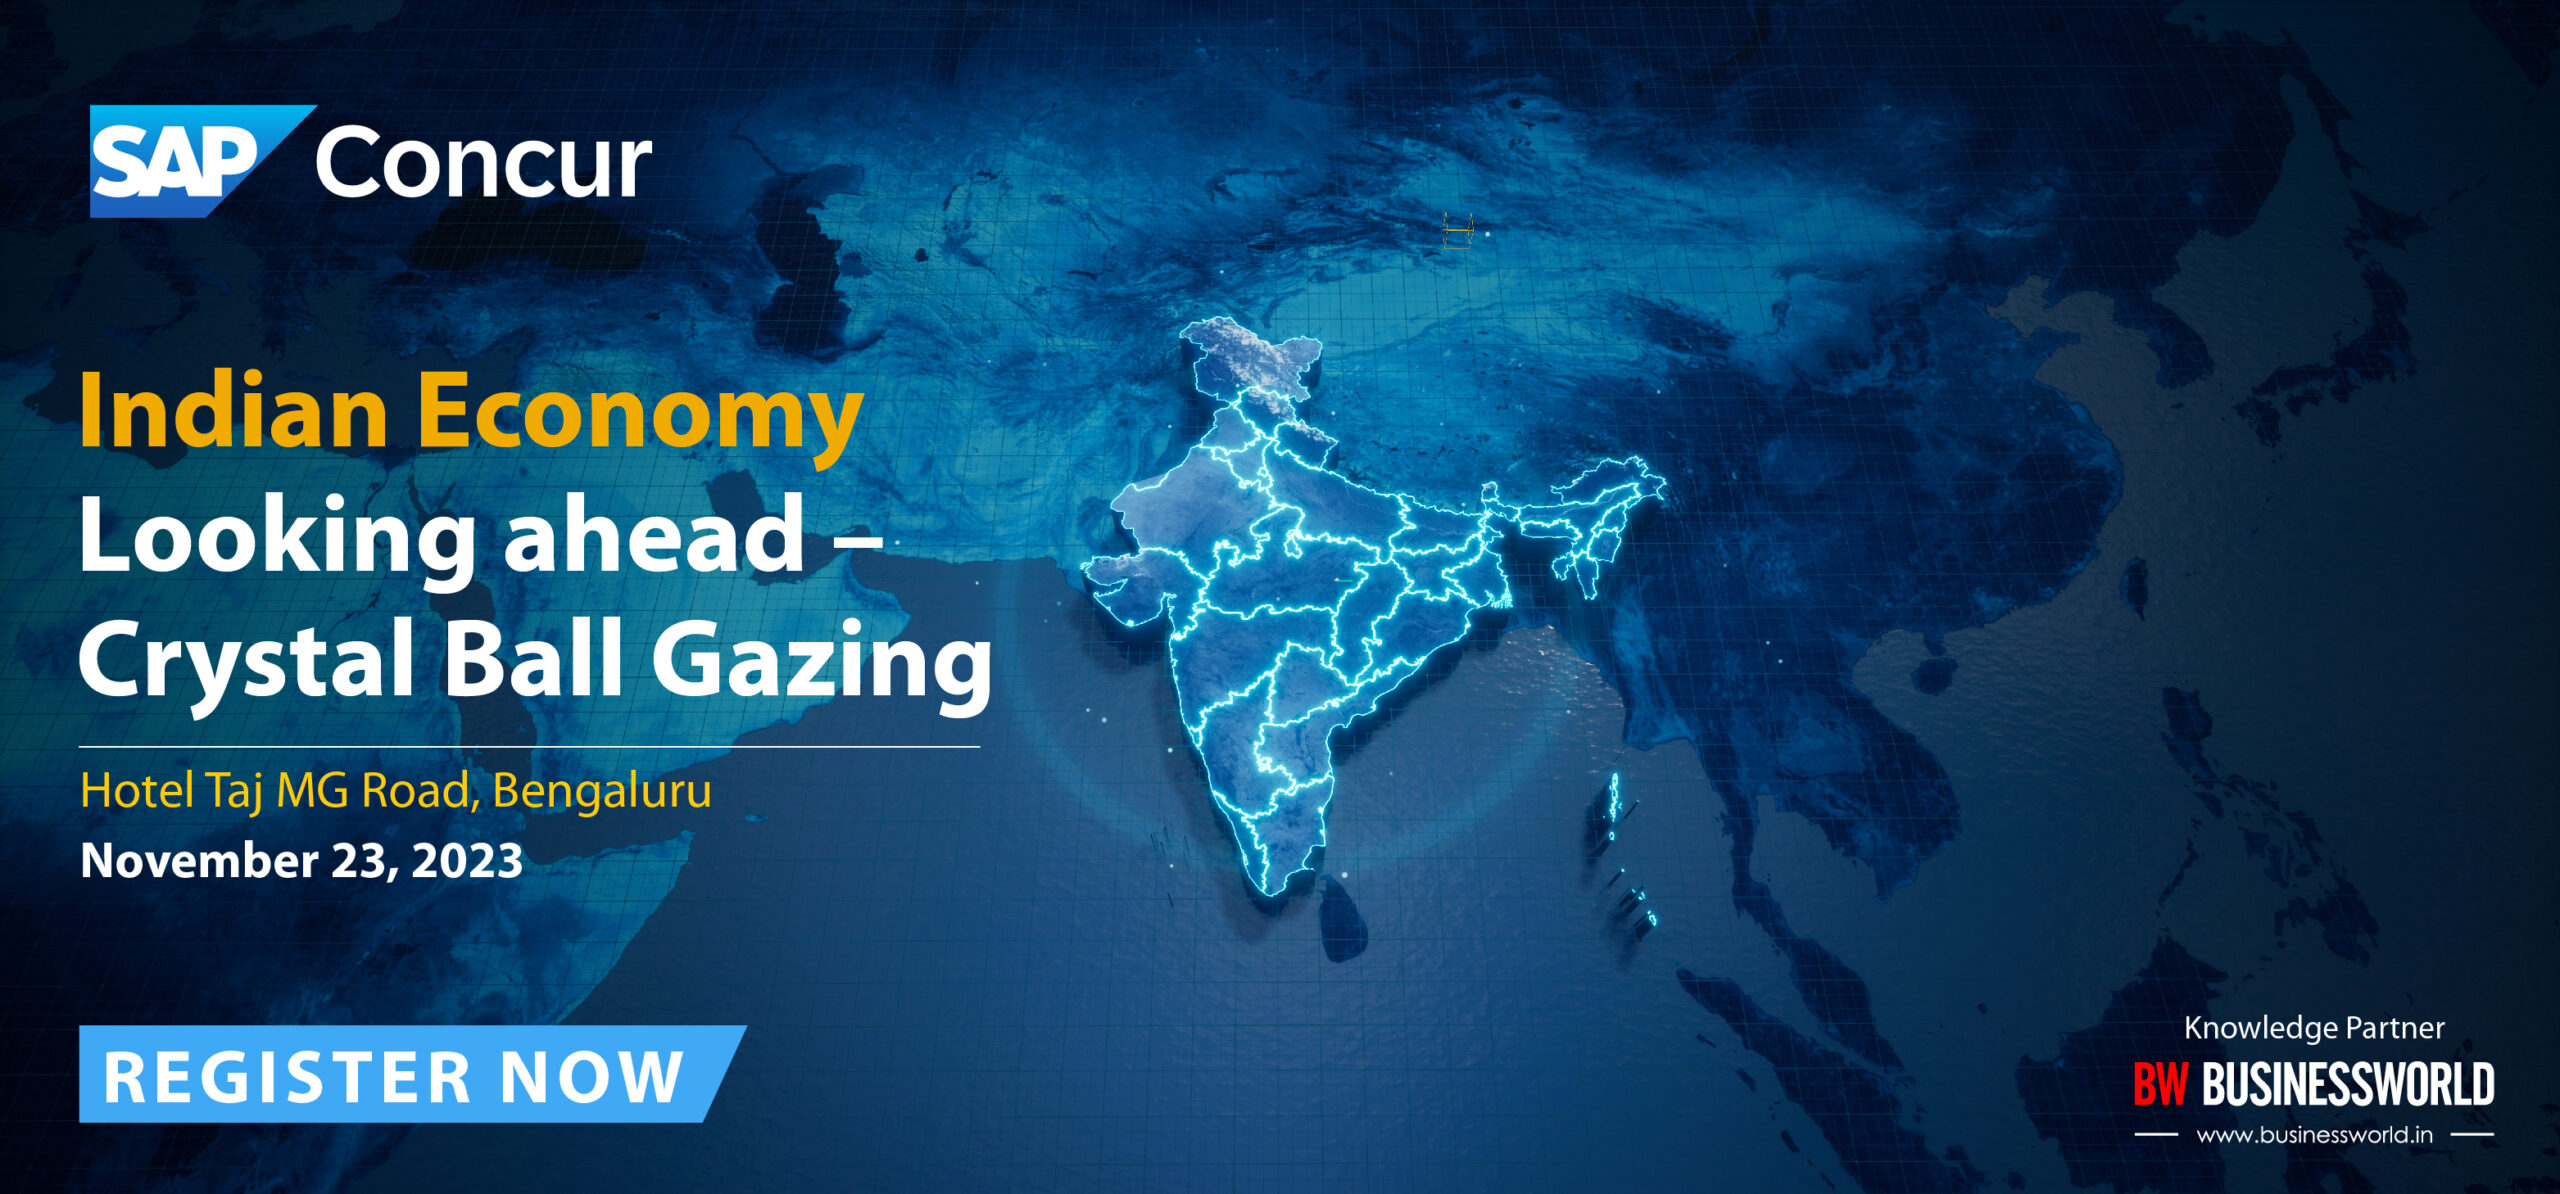 SAP: Indian Economy Looking Ahead – Crystal Ball Gazing bangalore - BW Businessworld